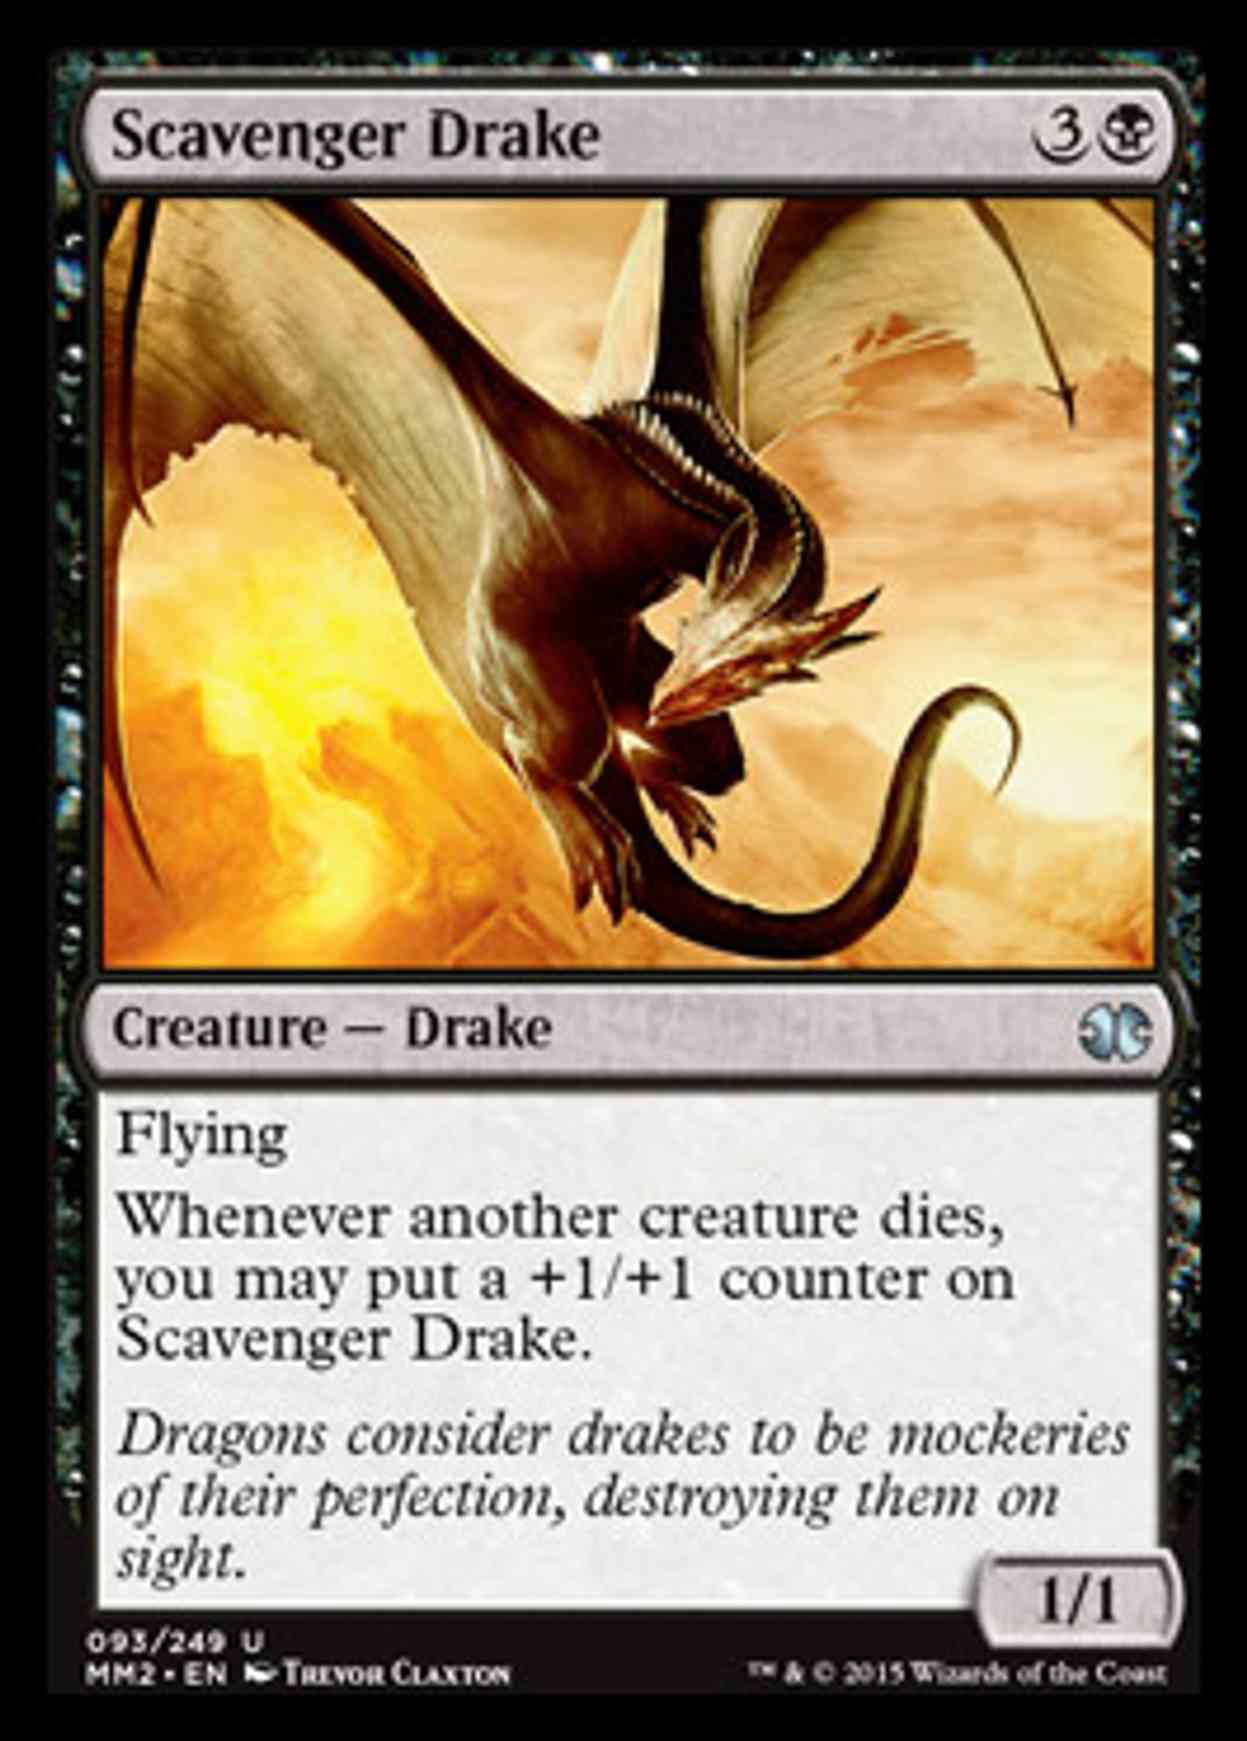 Scavenger Drake magic card front